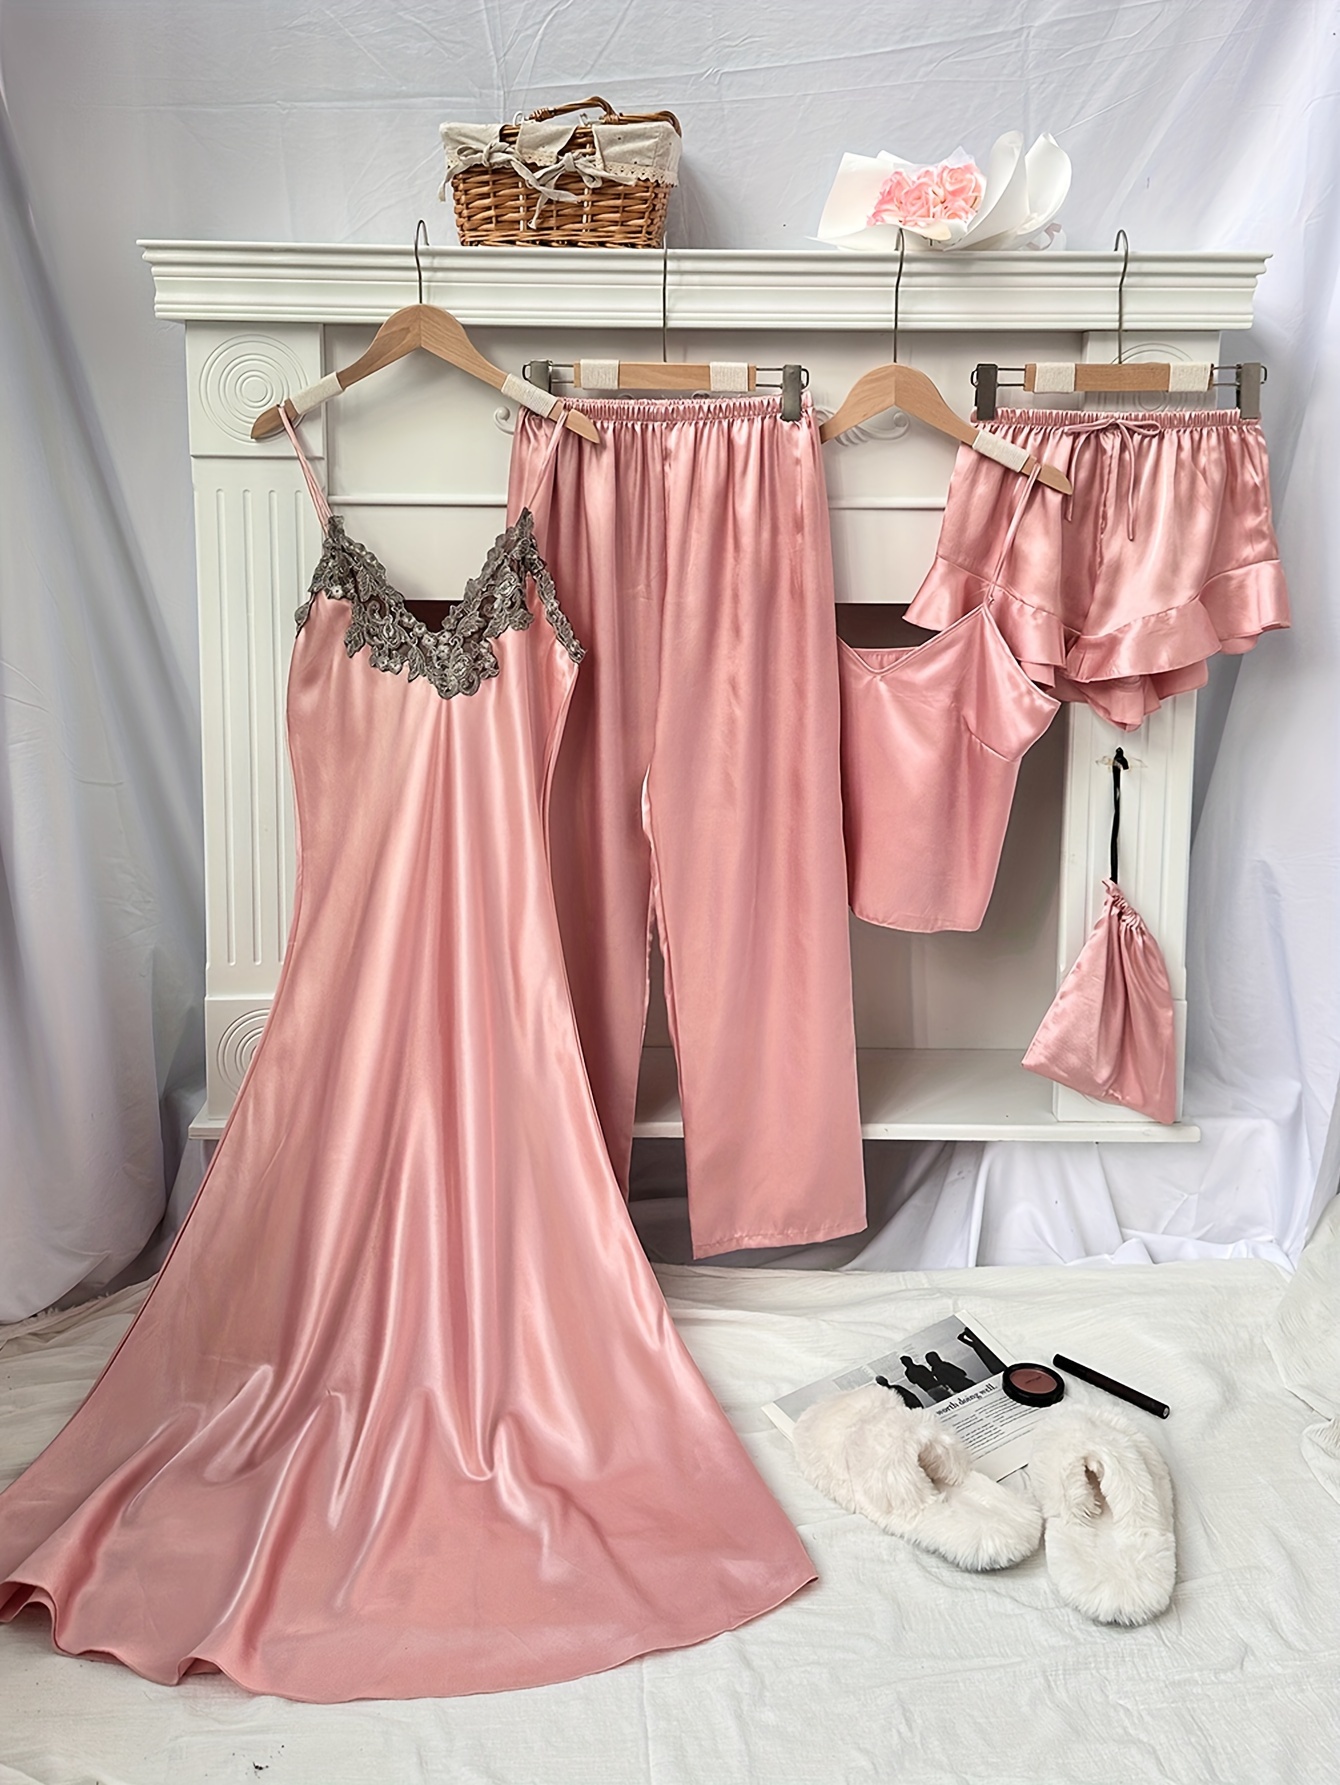 Women's Lace Trim Satin Sleepwear Cami Top and Shorts Pajama Sets, Pink